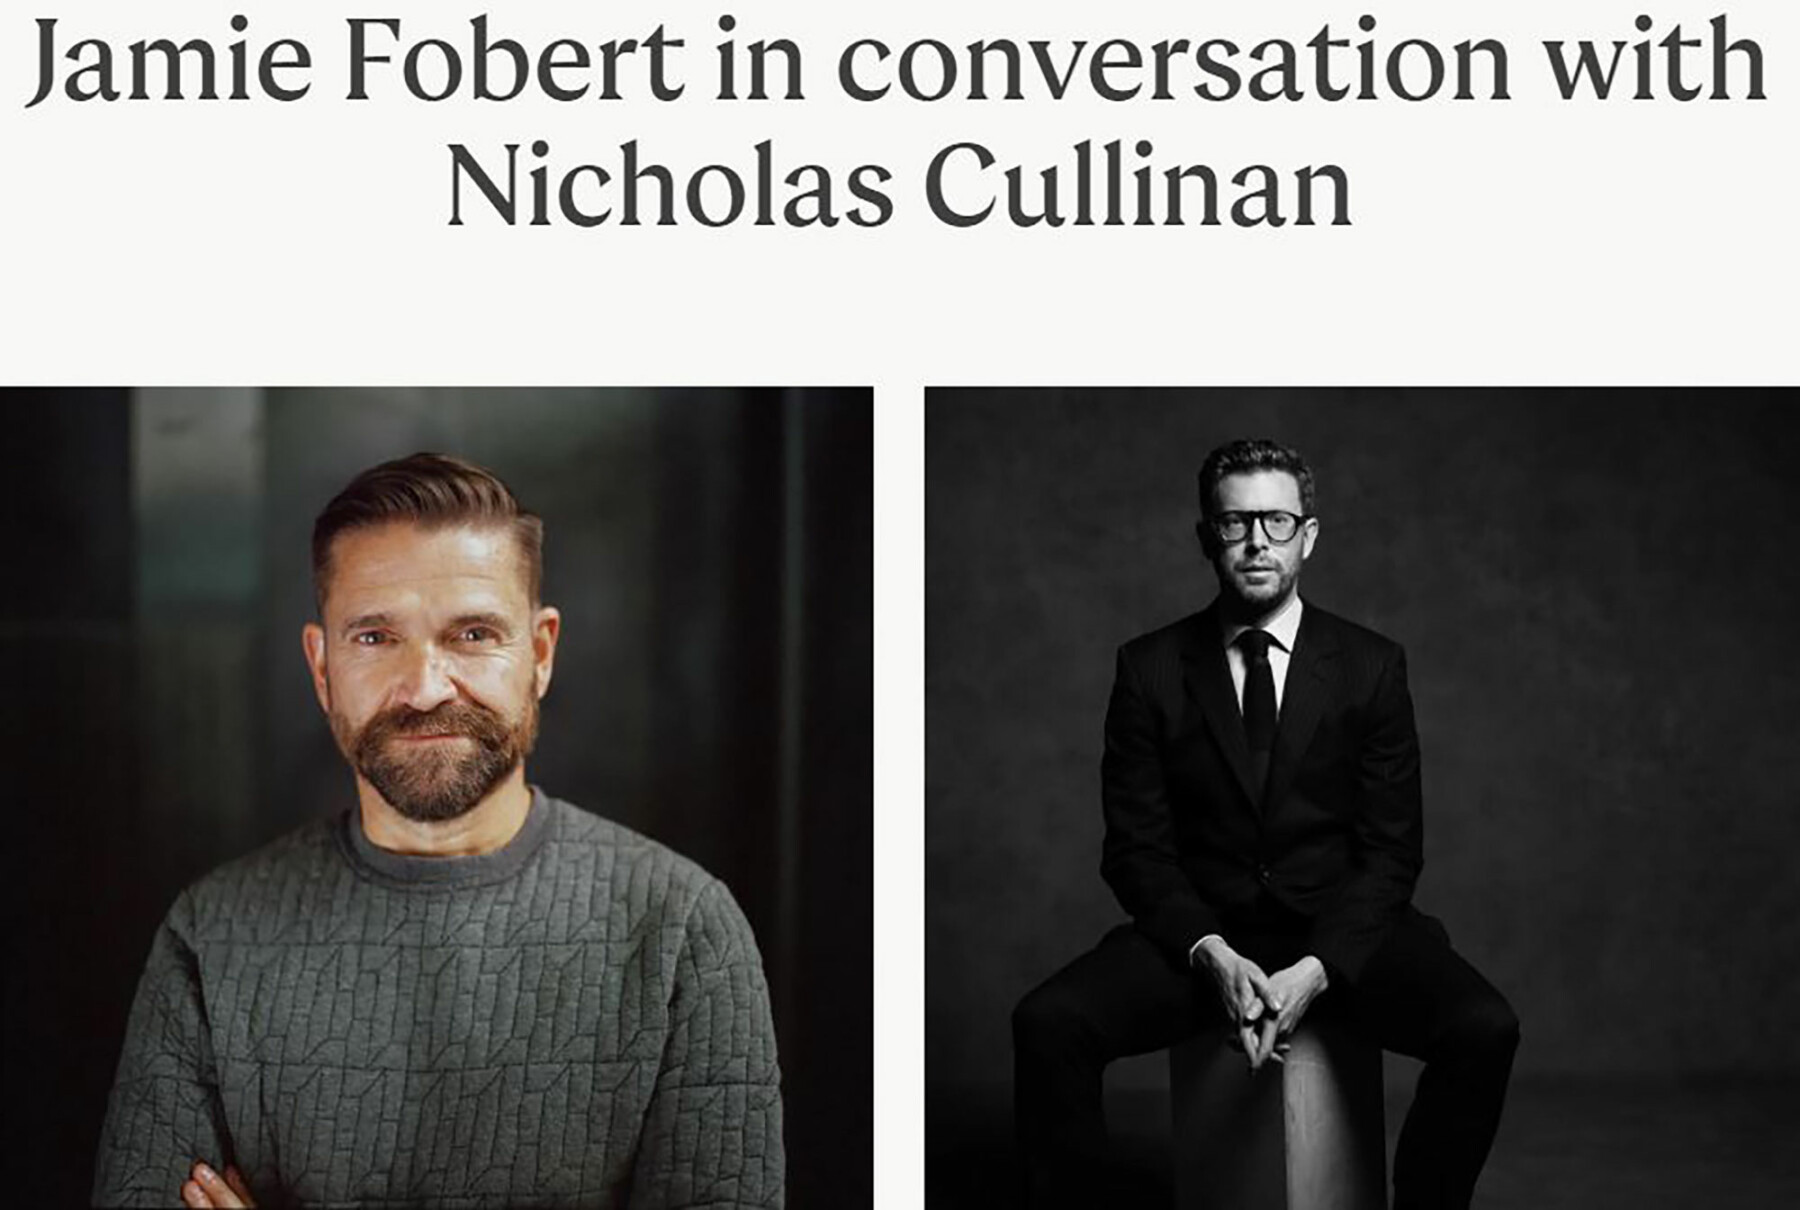 Jamie-fobert-lecture-talk-nicholas-cullinan-in-conversation-national-portrait-gallery-event